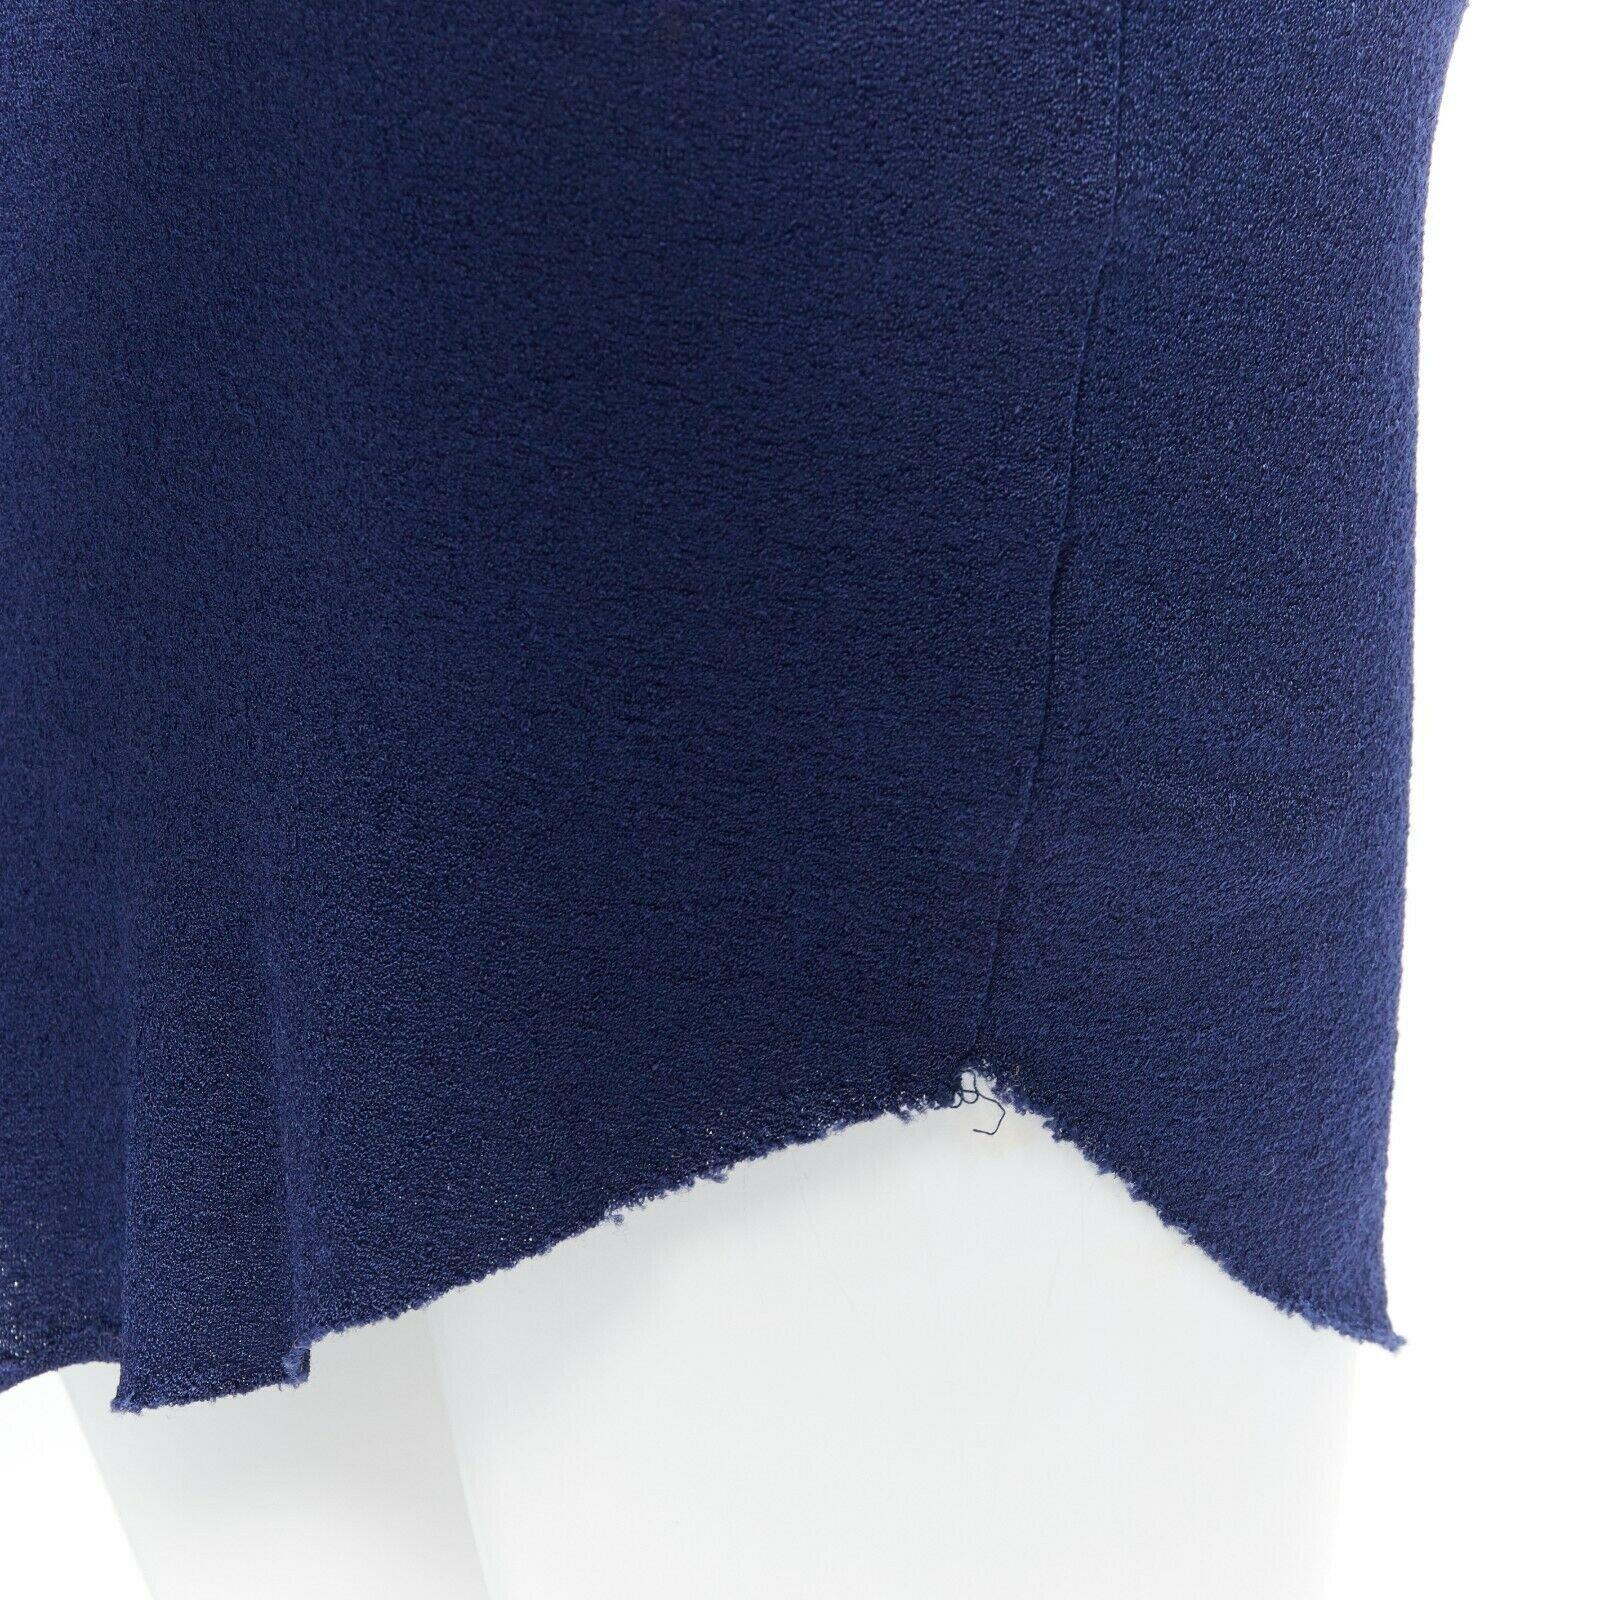 JILL STUART COLLECTION classic blue textured raw-edges hem sleeveless tank dress 1